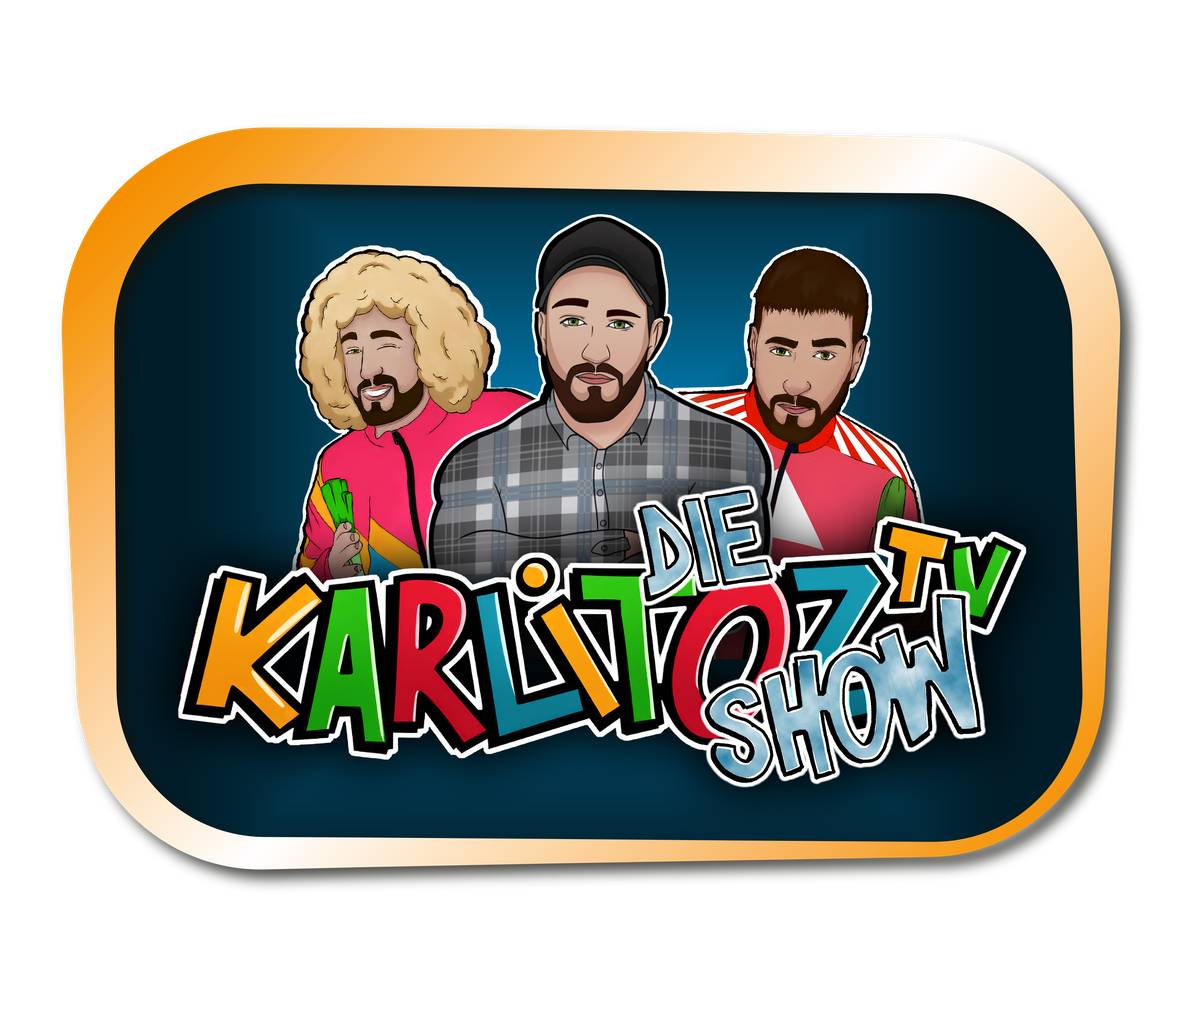 karlitoz tv tour